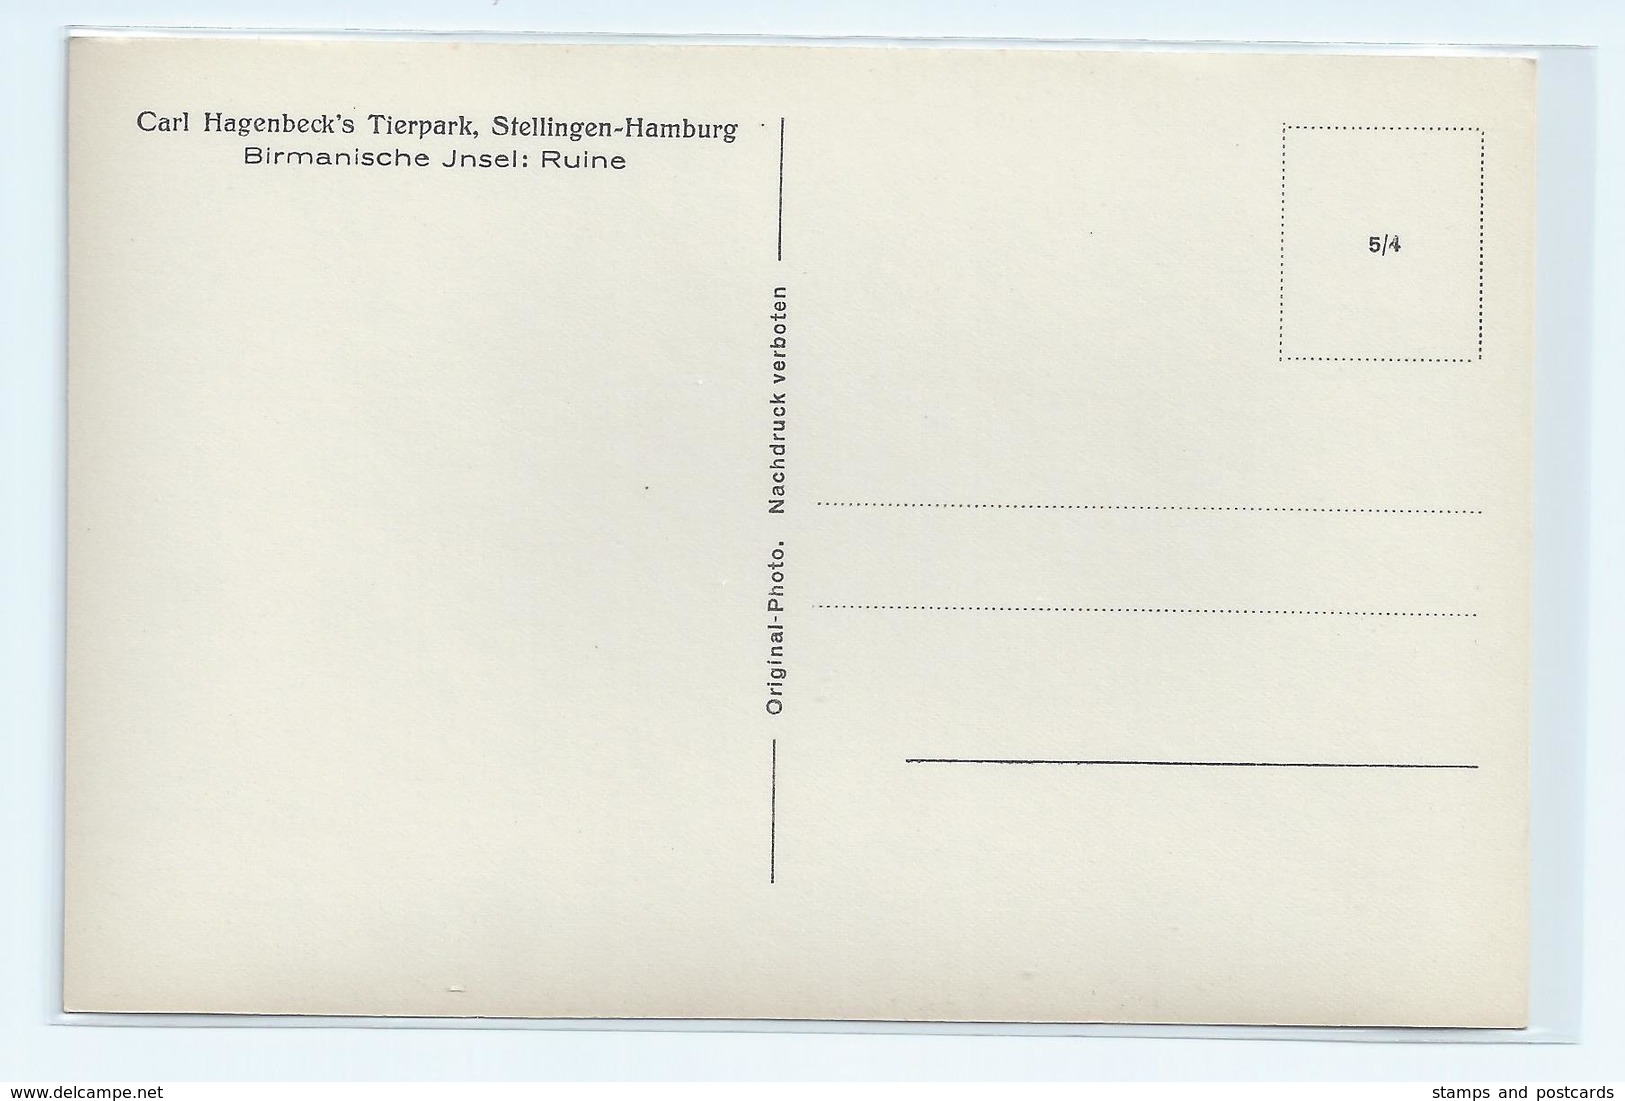 CARL HAGENBECK'S TIERPARK. OLD POSTCARD  C.1930 #D17. - Stellingen